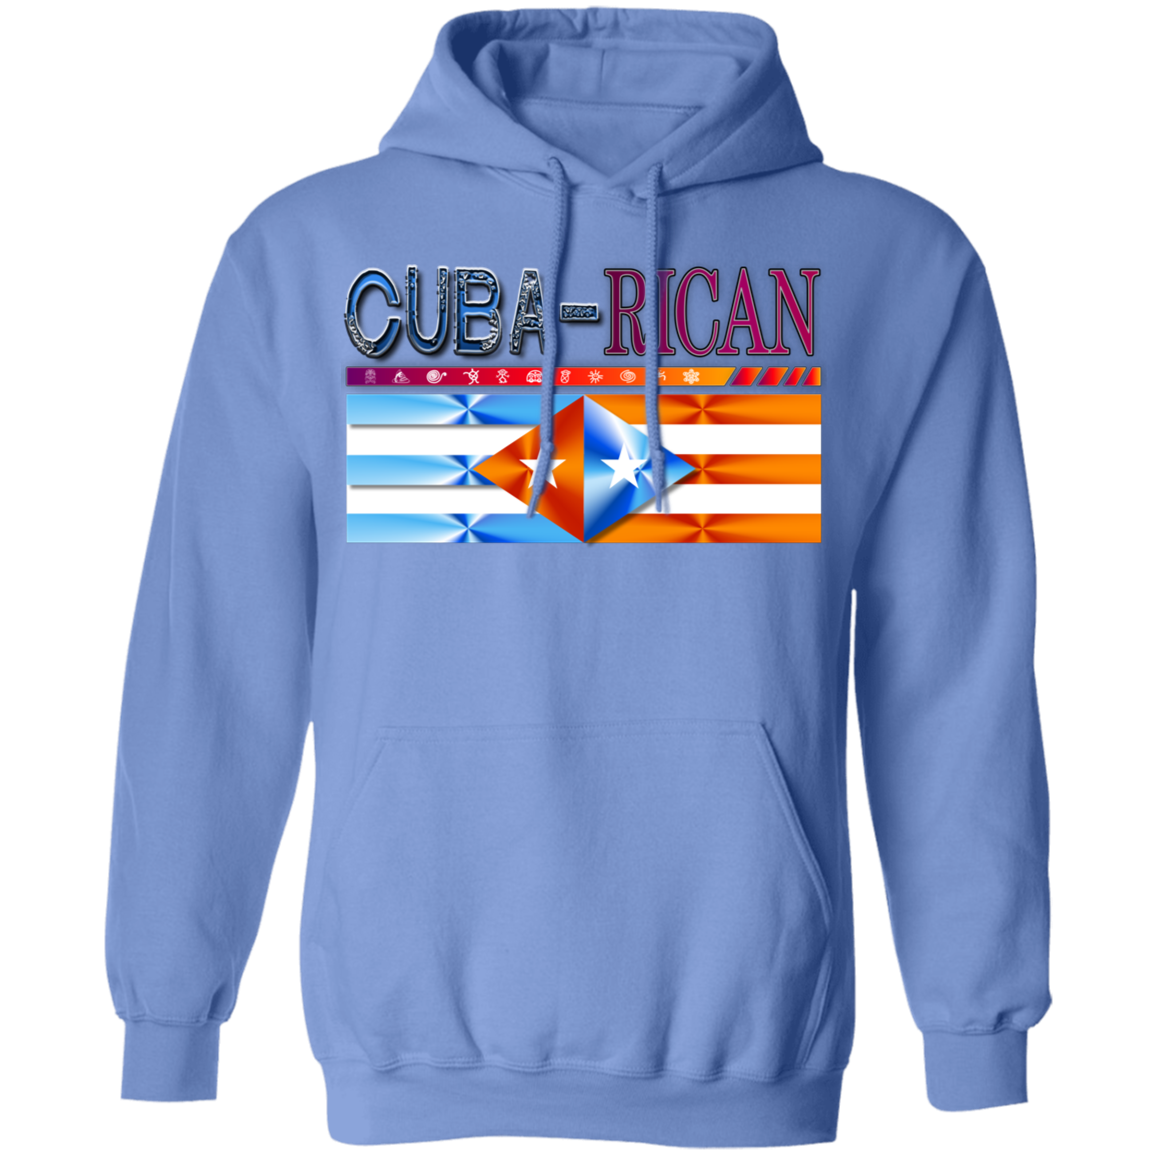 Cuba-Rican Pullover Hoodie - Puerto Rican Pride